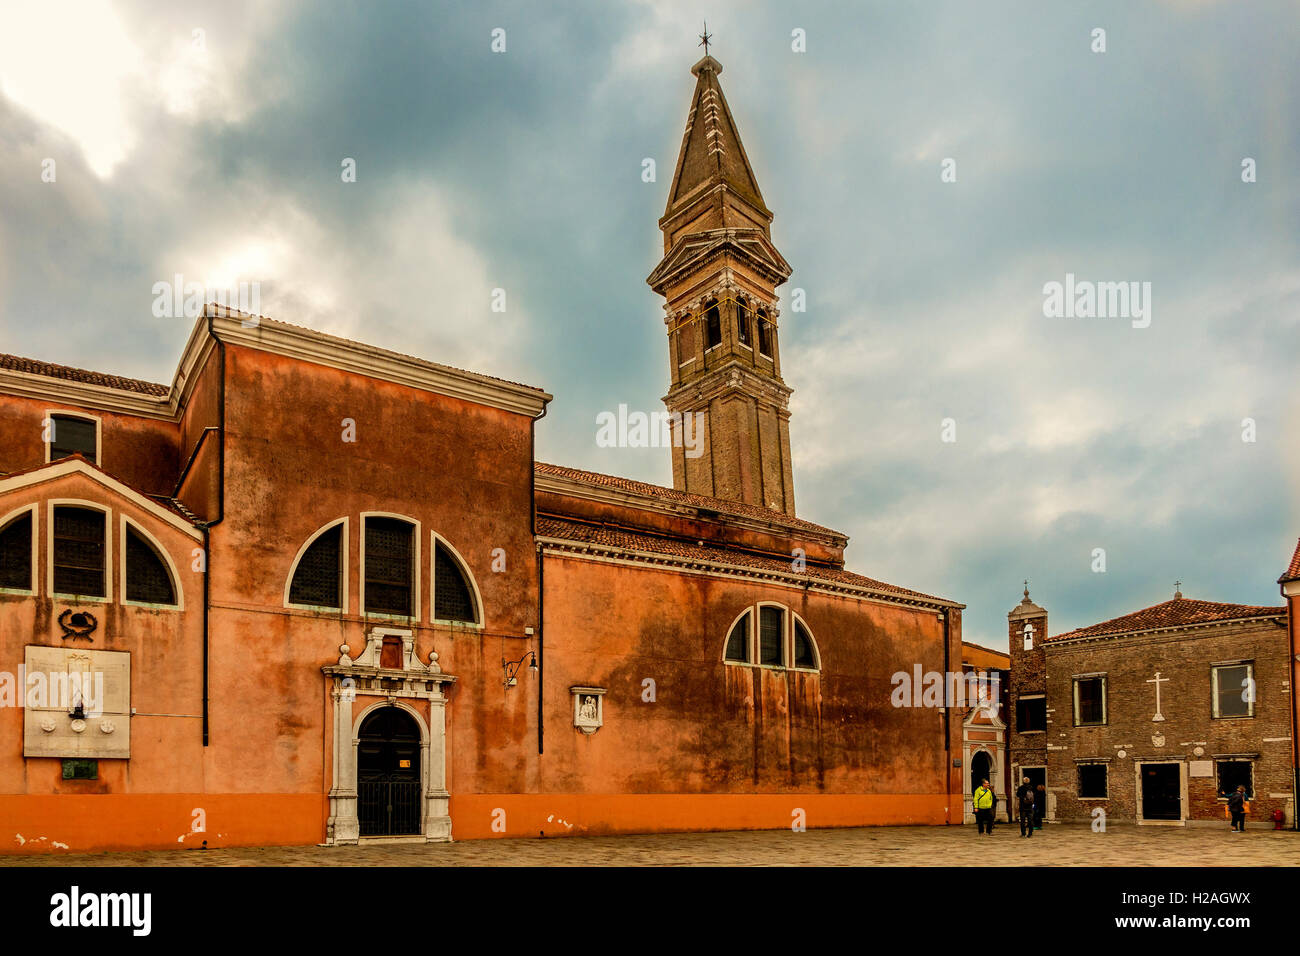 The Church Square Burano Island Venice Italy Stock Photo